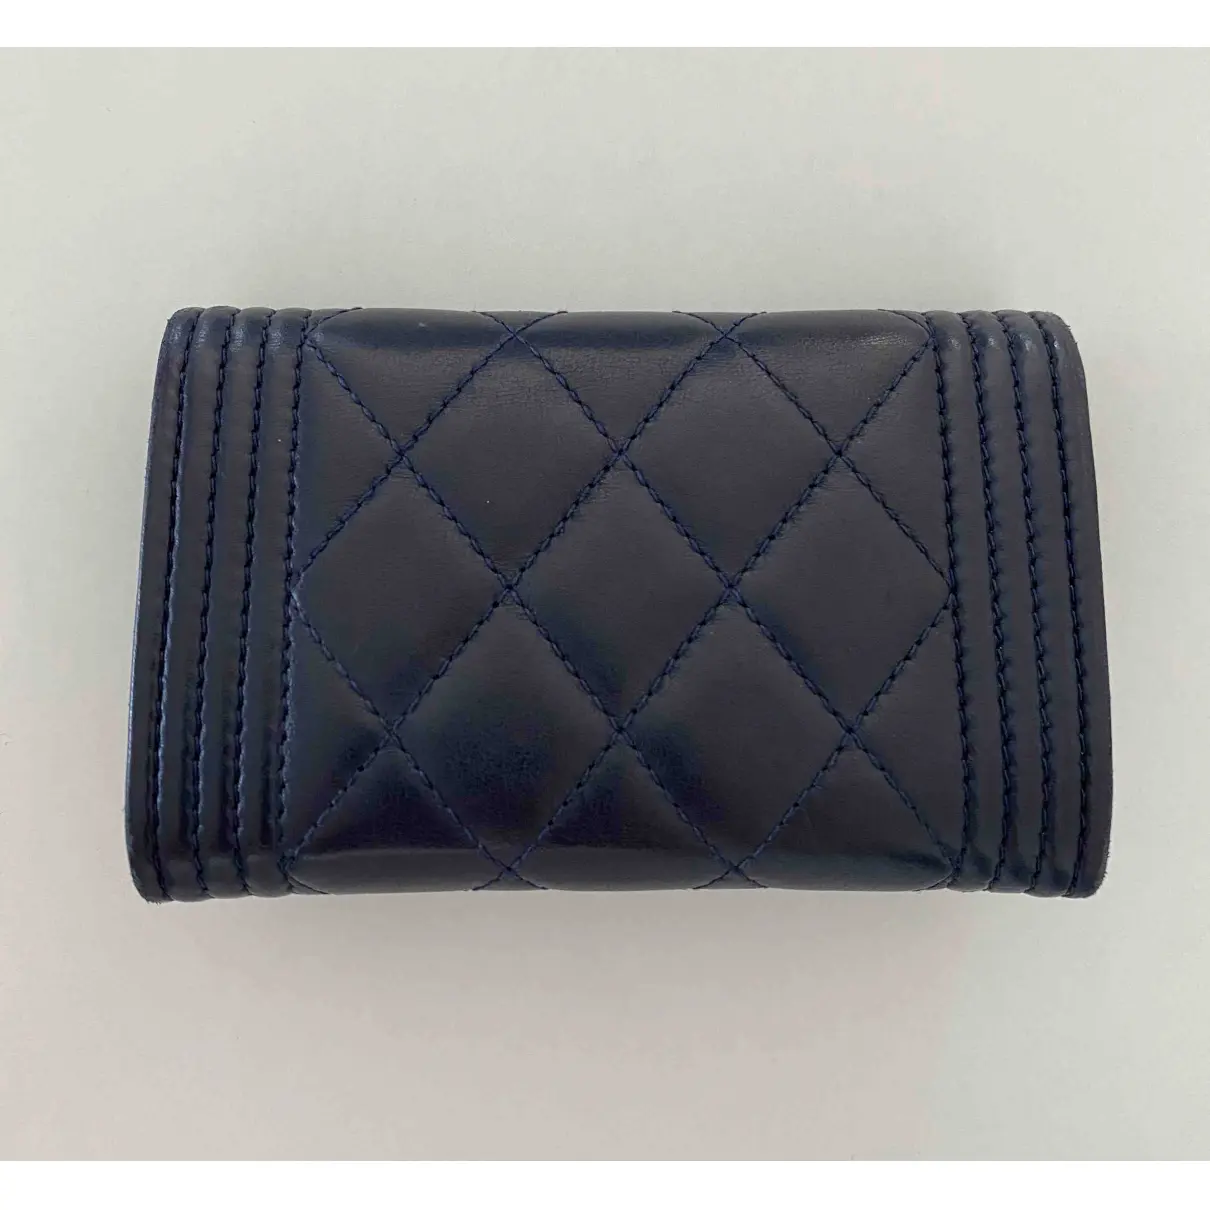 Buy Chanel Boy leather wallet online